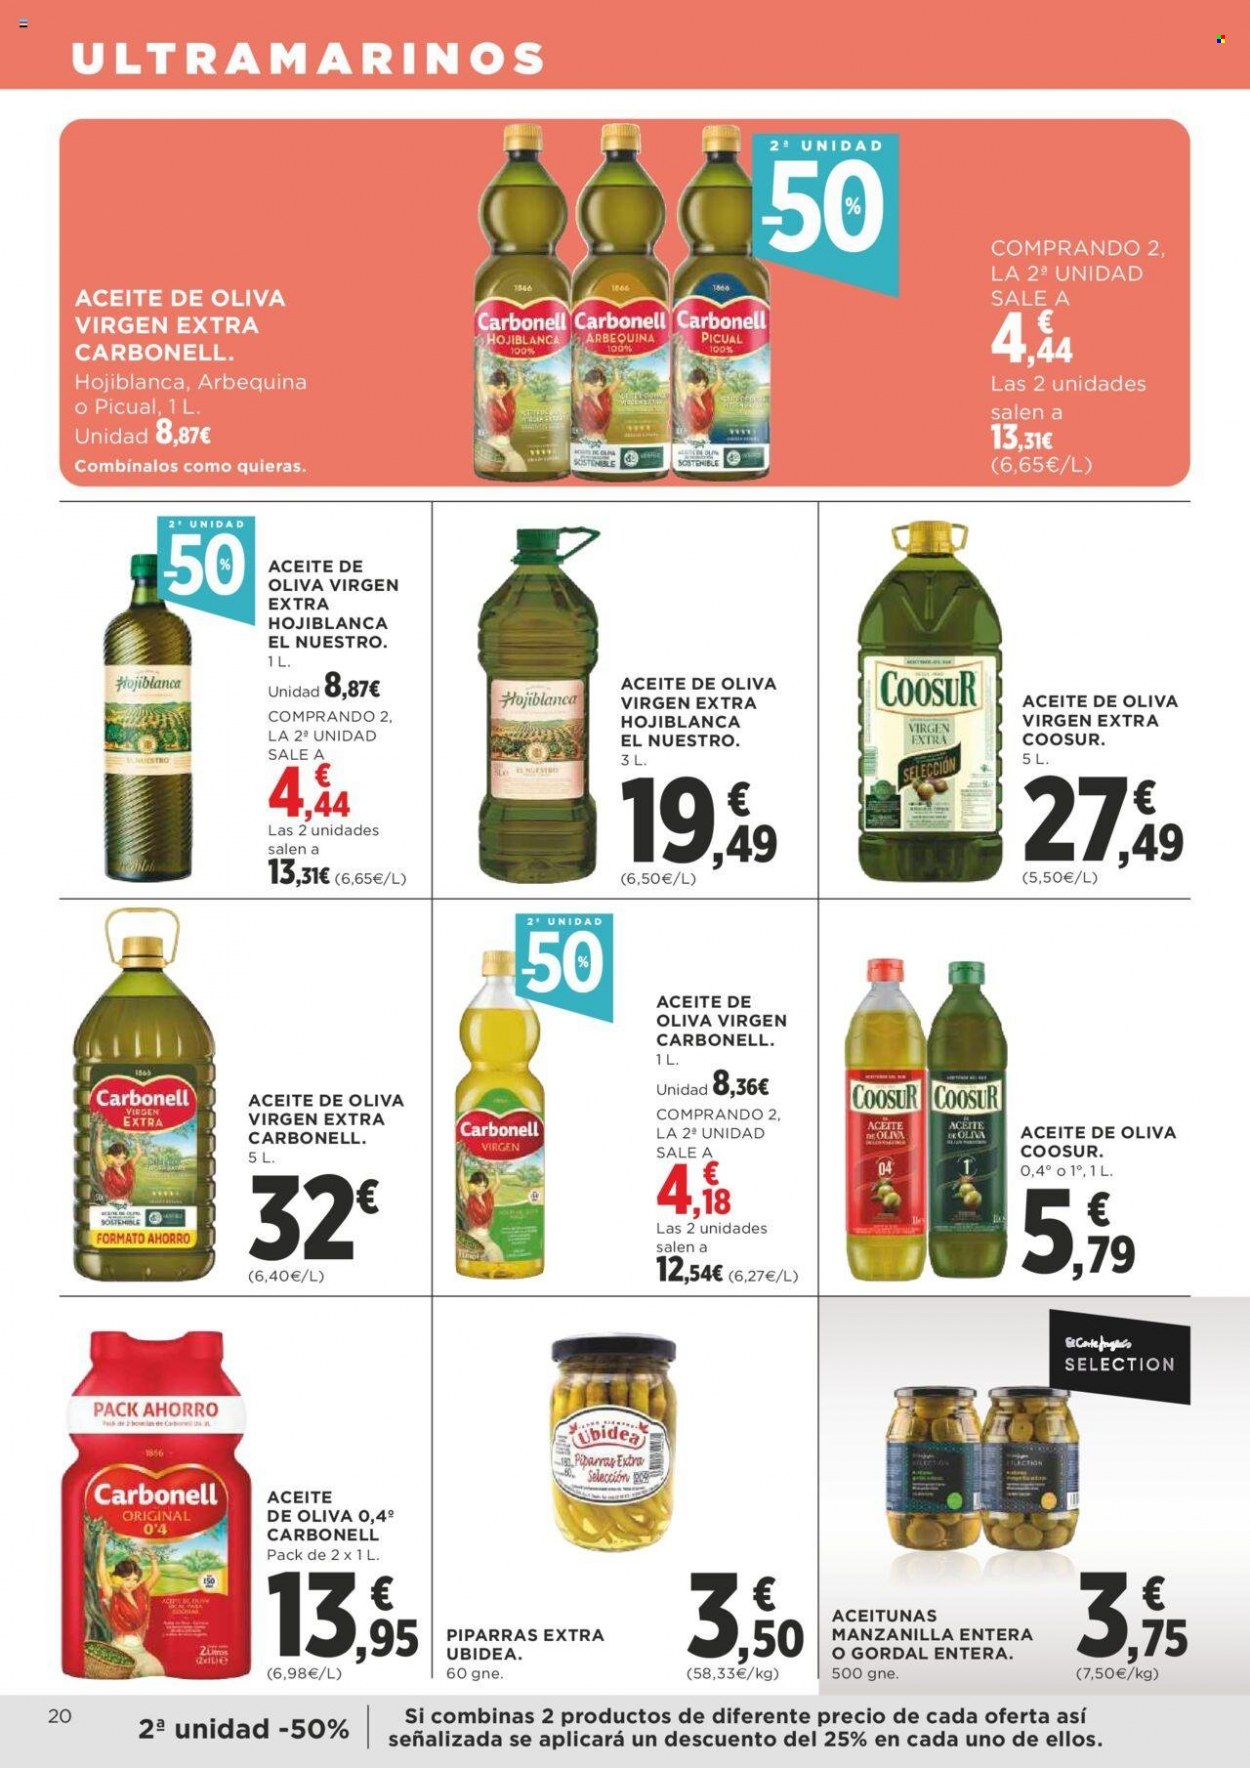 thumbnail - Folleto actual Supercor supermercados - 23/03/23 - 04/04/23 - Ventas - piparras, Carbonell, aceite, aceite de oliva, aceite de oliva extra virgen, Coosur, manzanilla. Página 20.